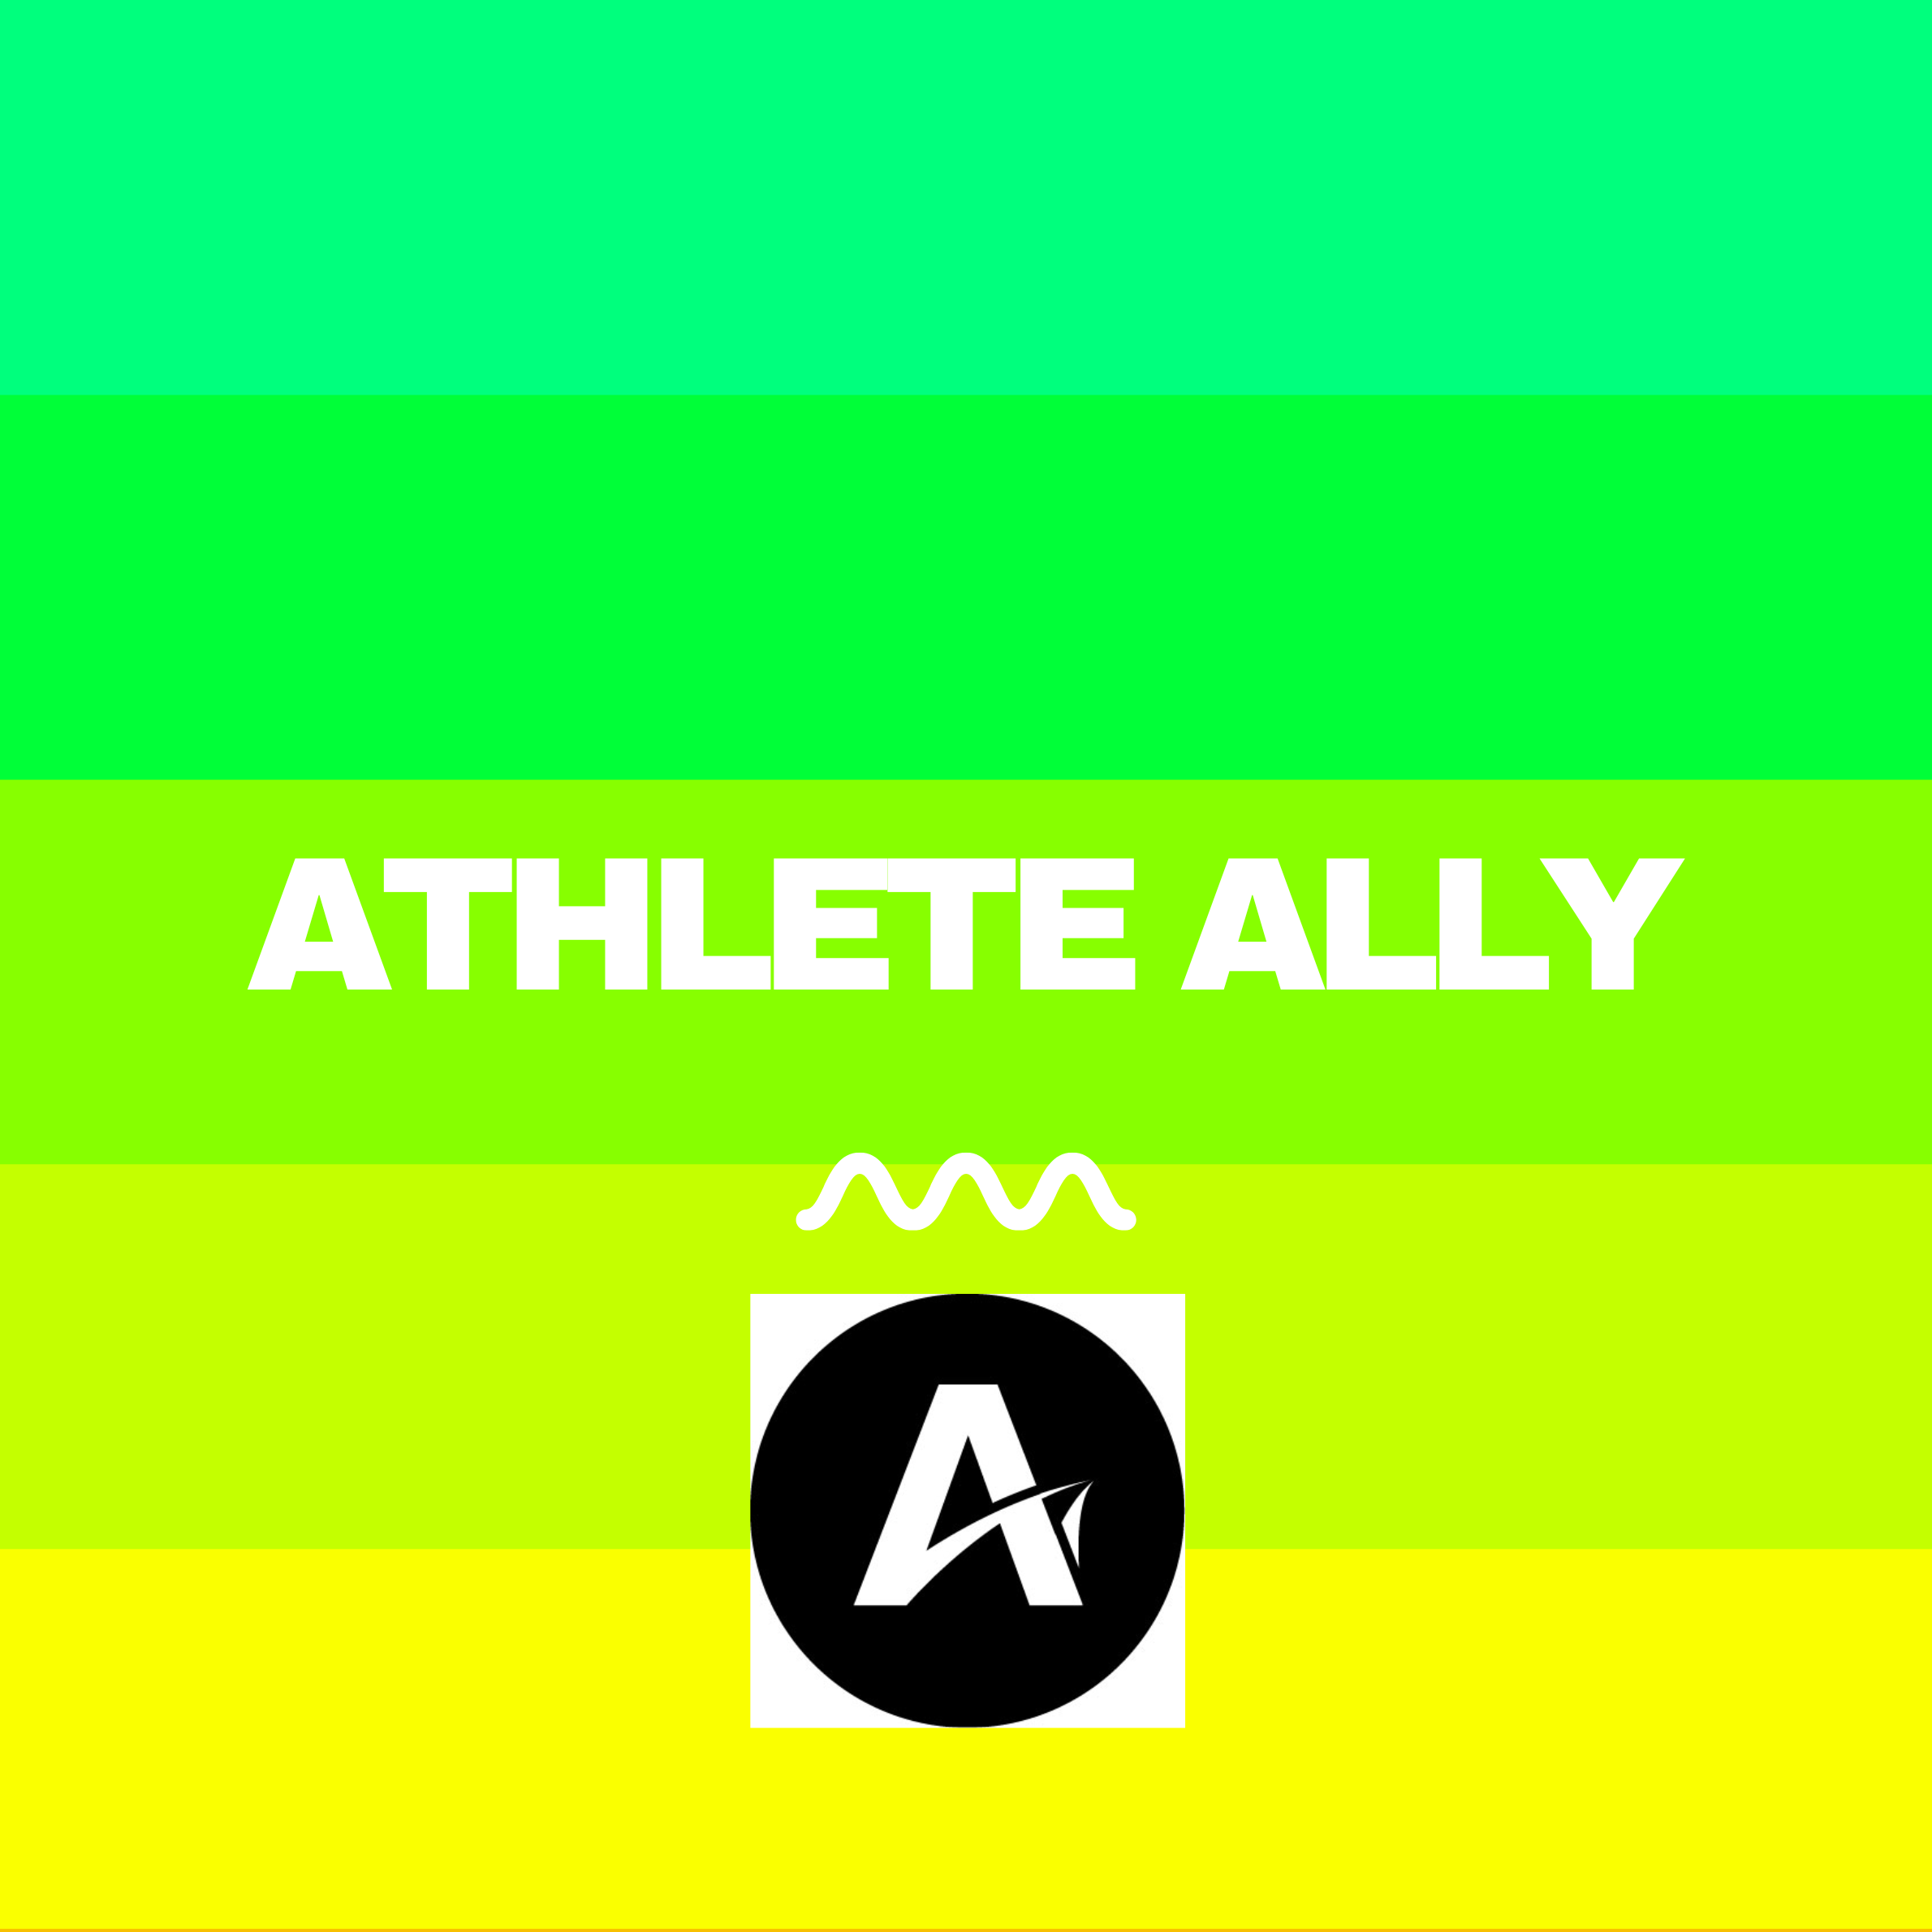 Athlete Ally